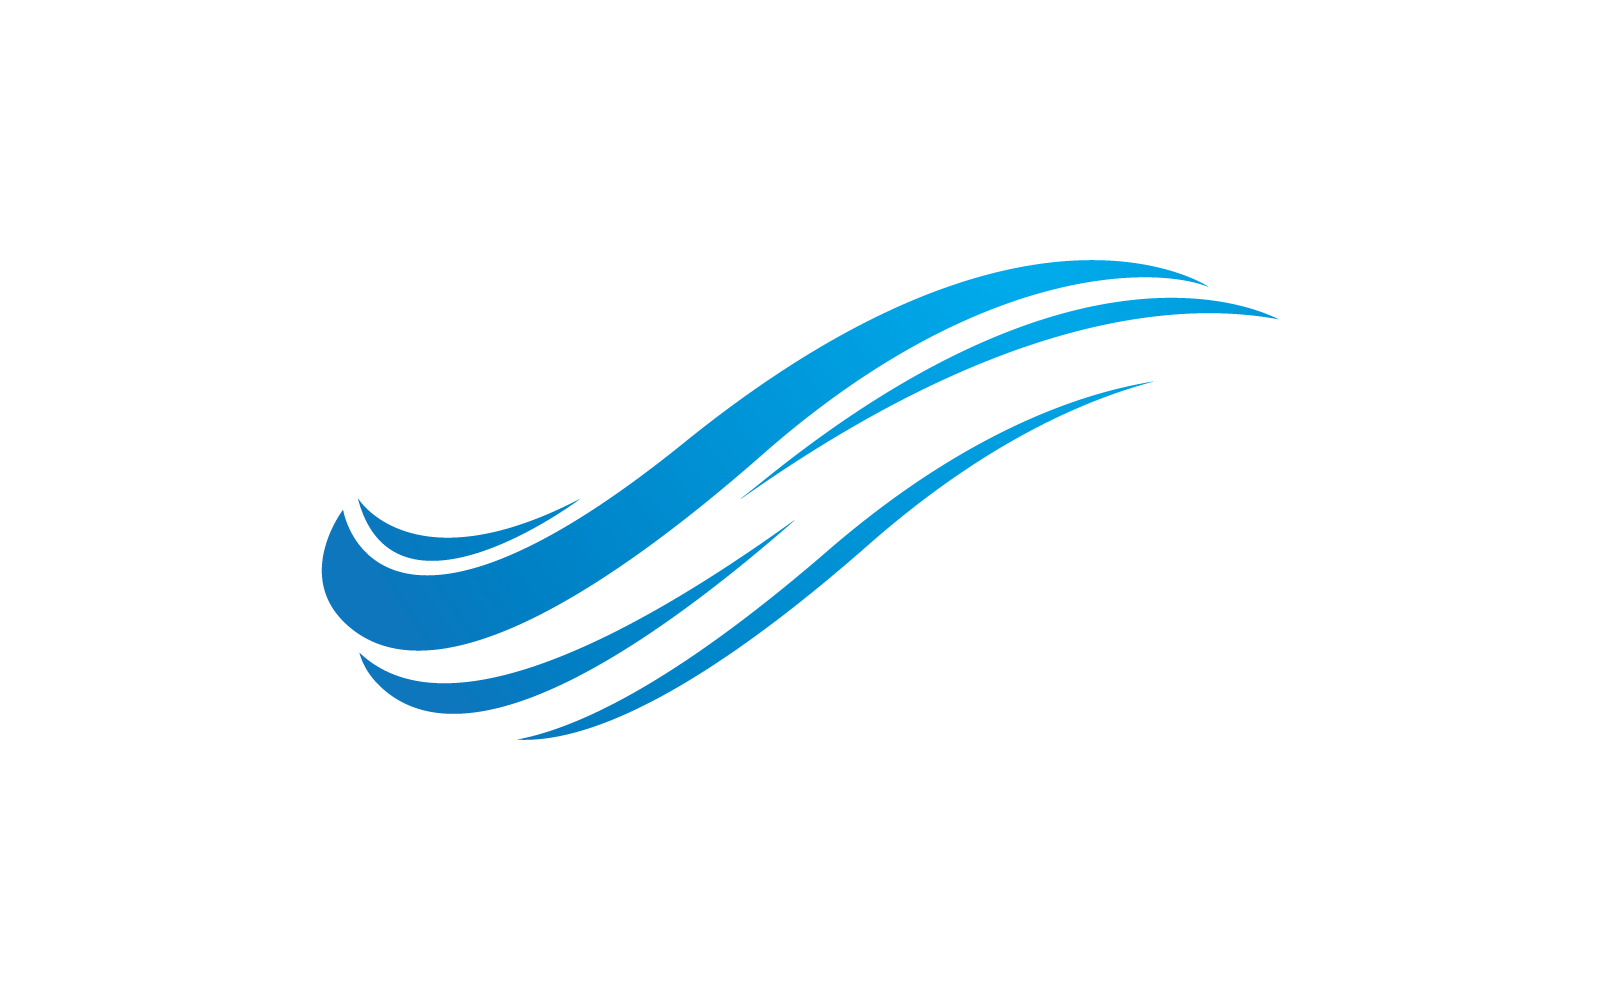 Water Wave logo vector design